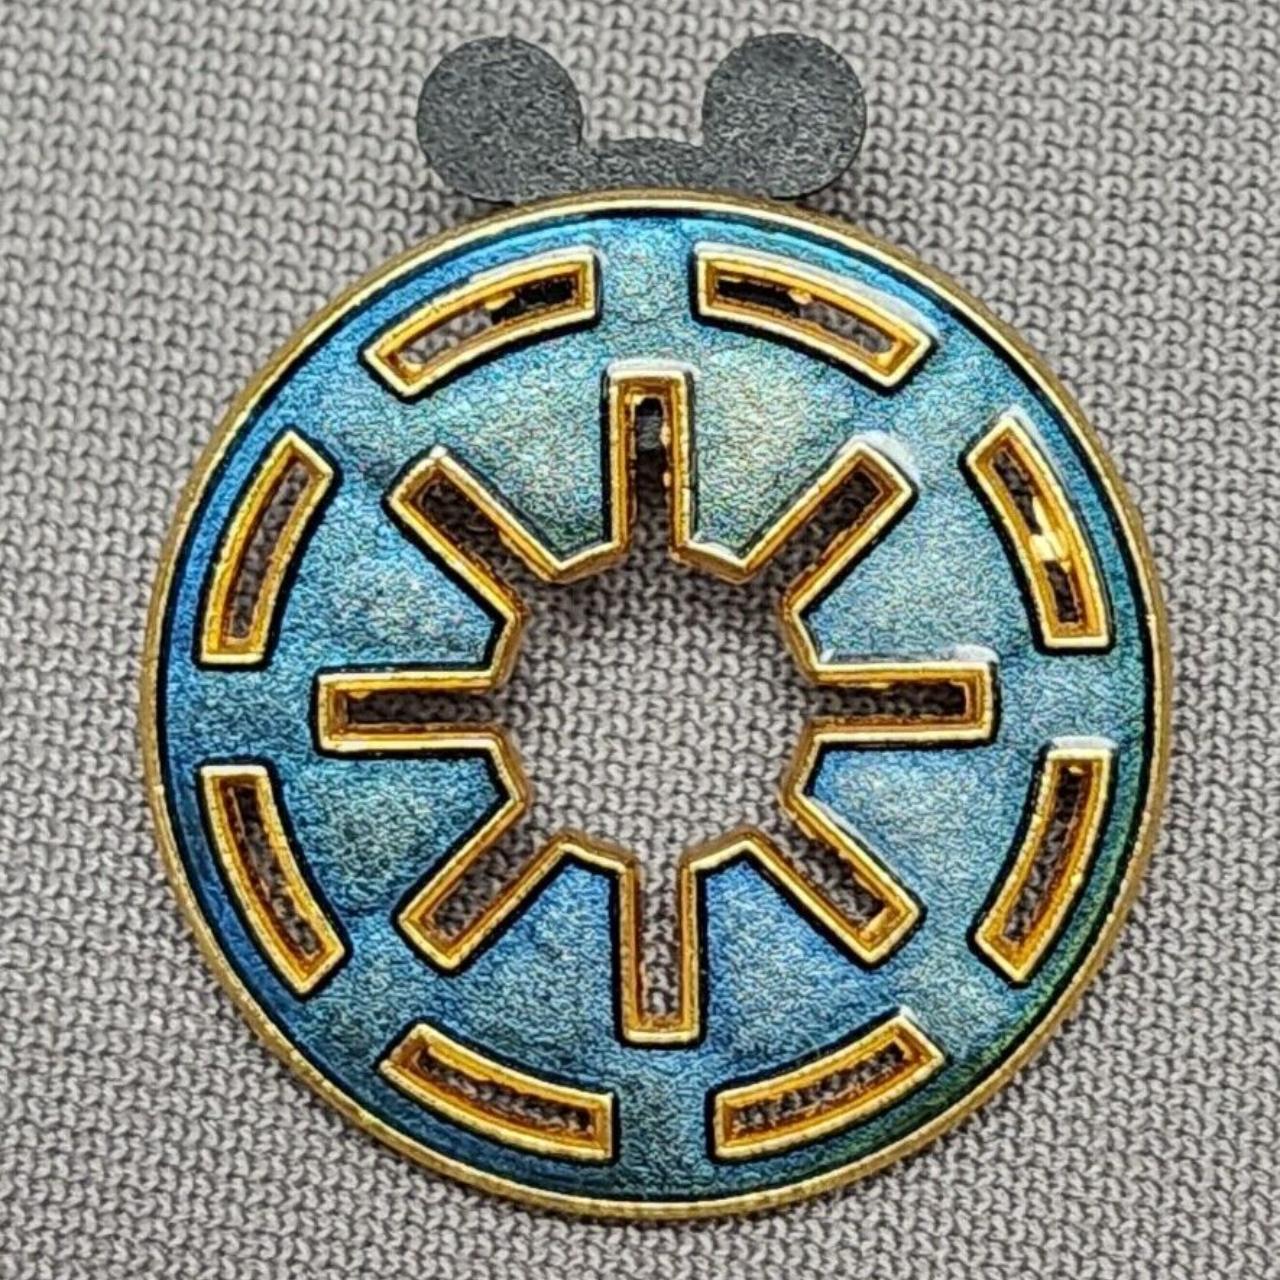 disney  Disney pins trading, Disney pins sets, Disney jewelry